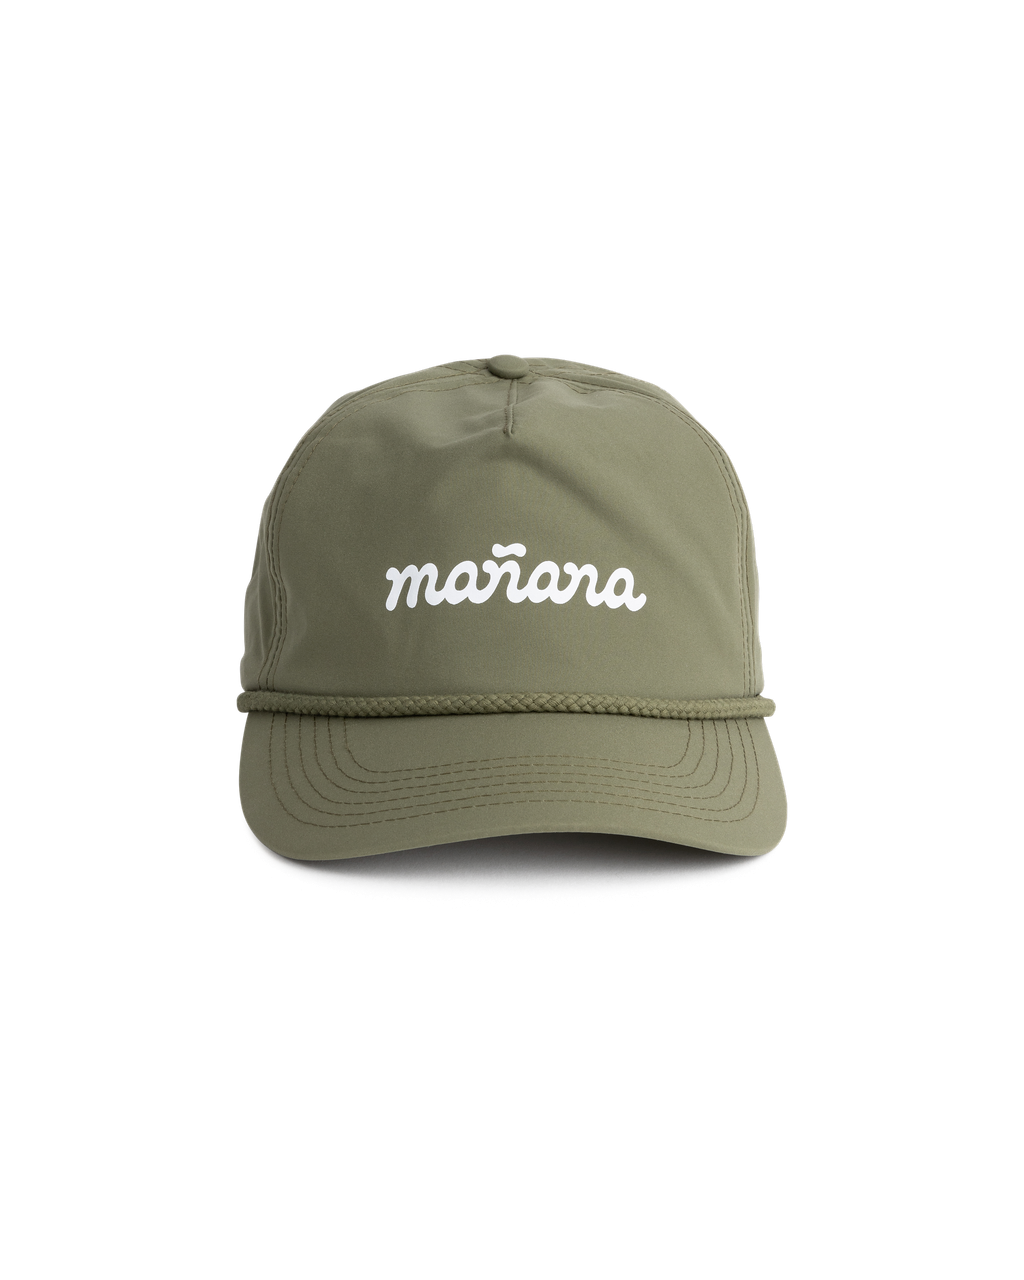 manana travel hat